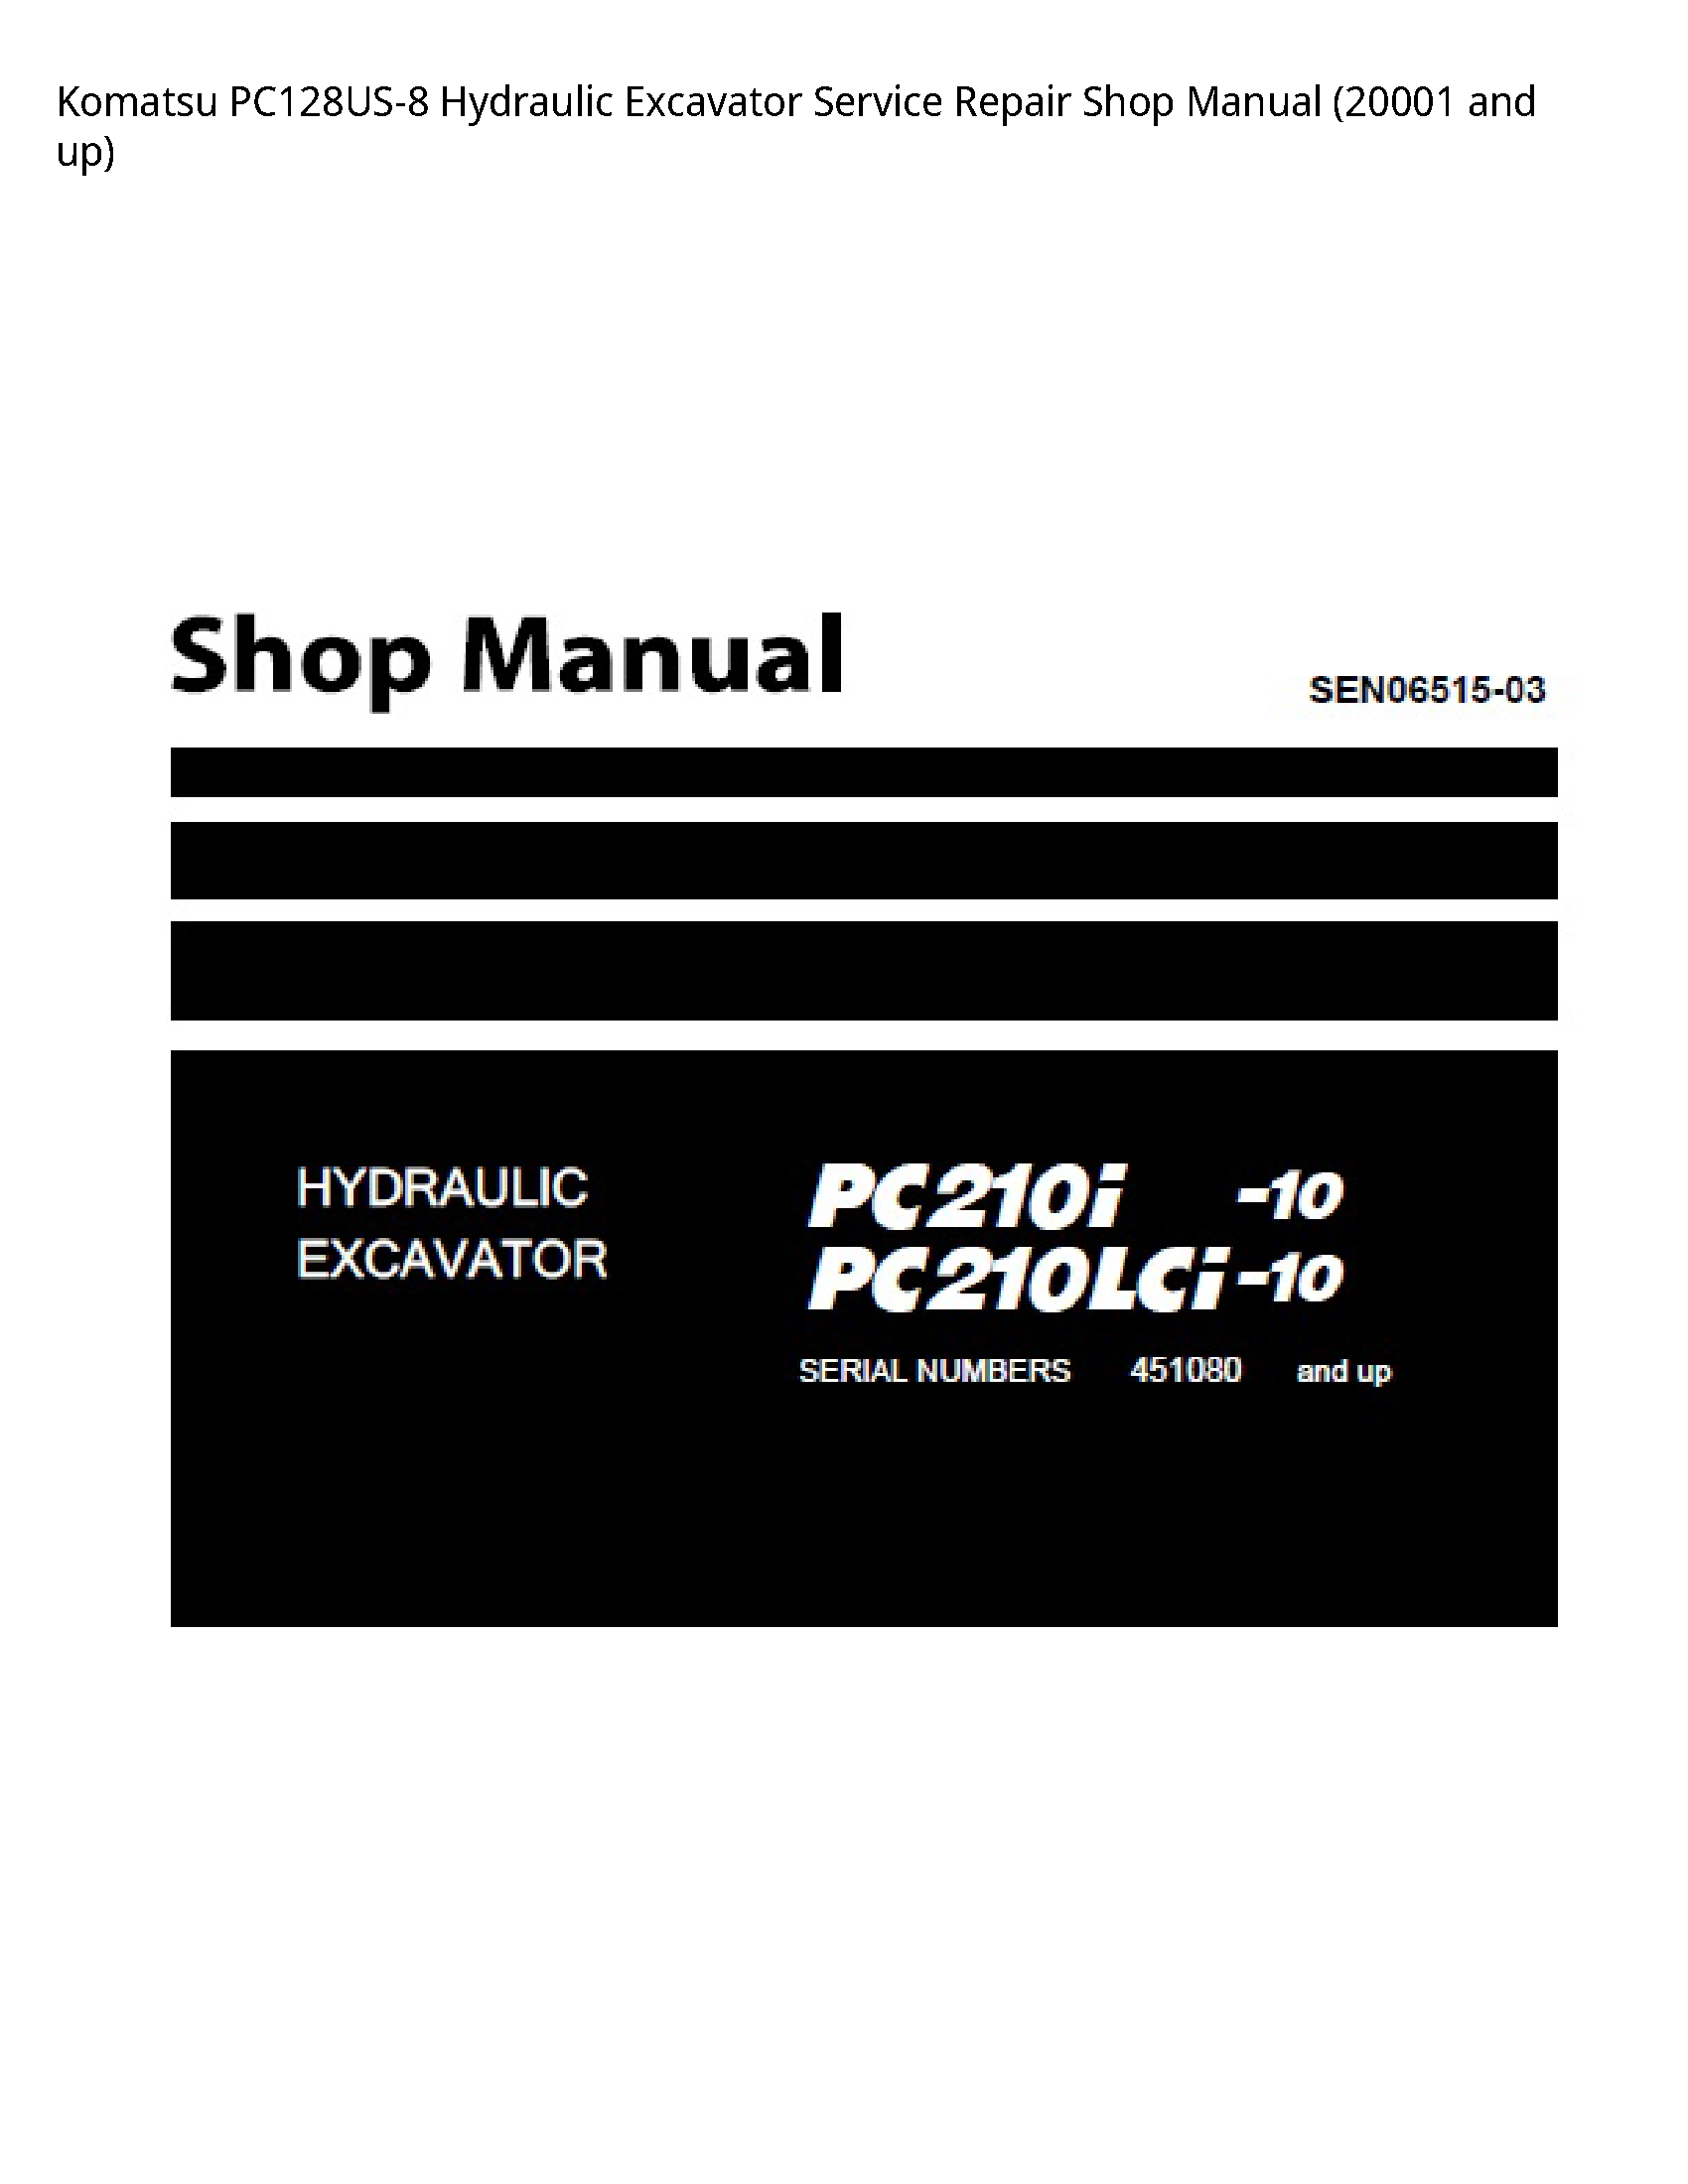 KOMATSU PC128US-8 Hydraulic Excavator manual